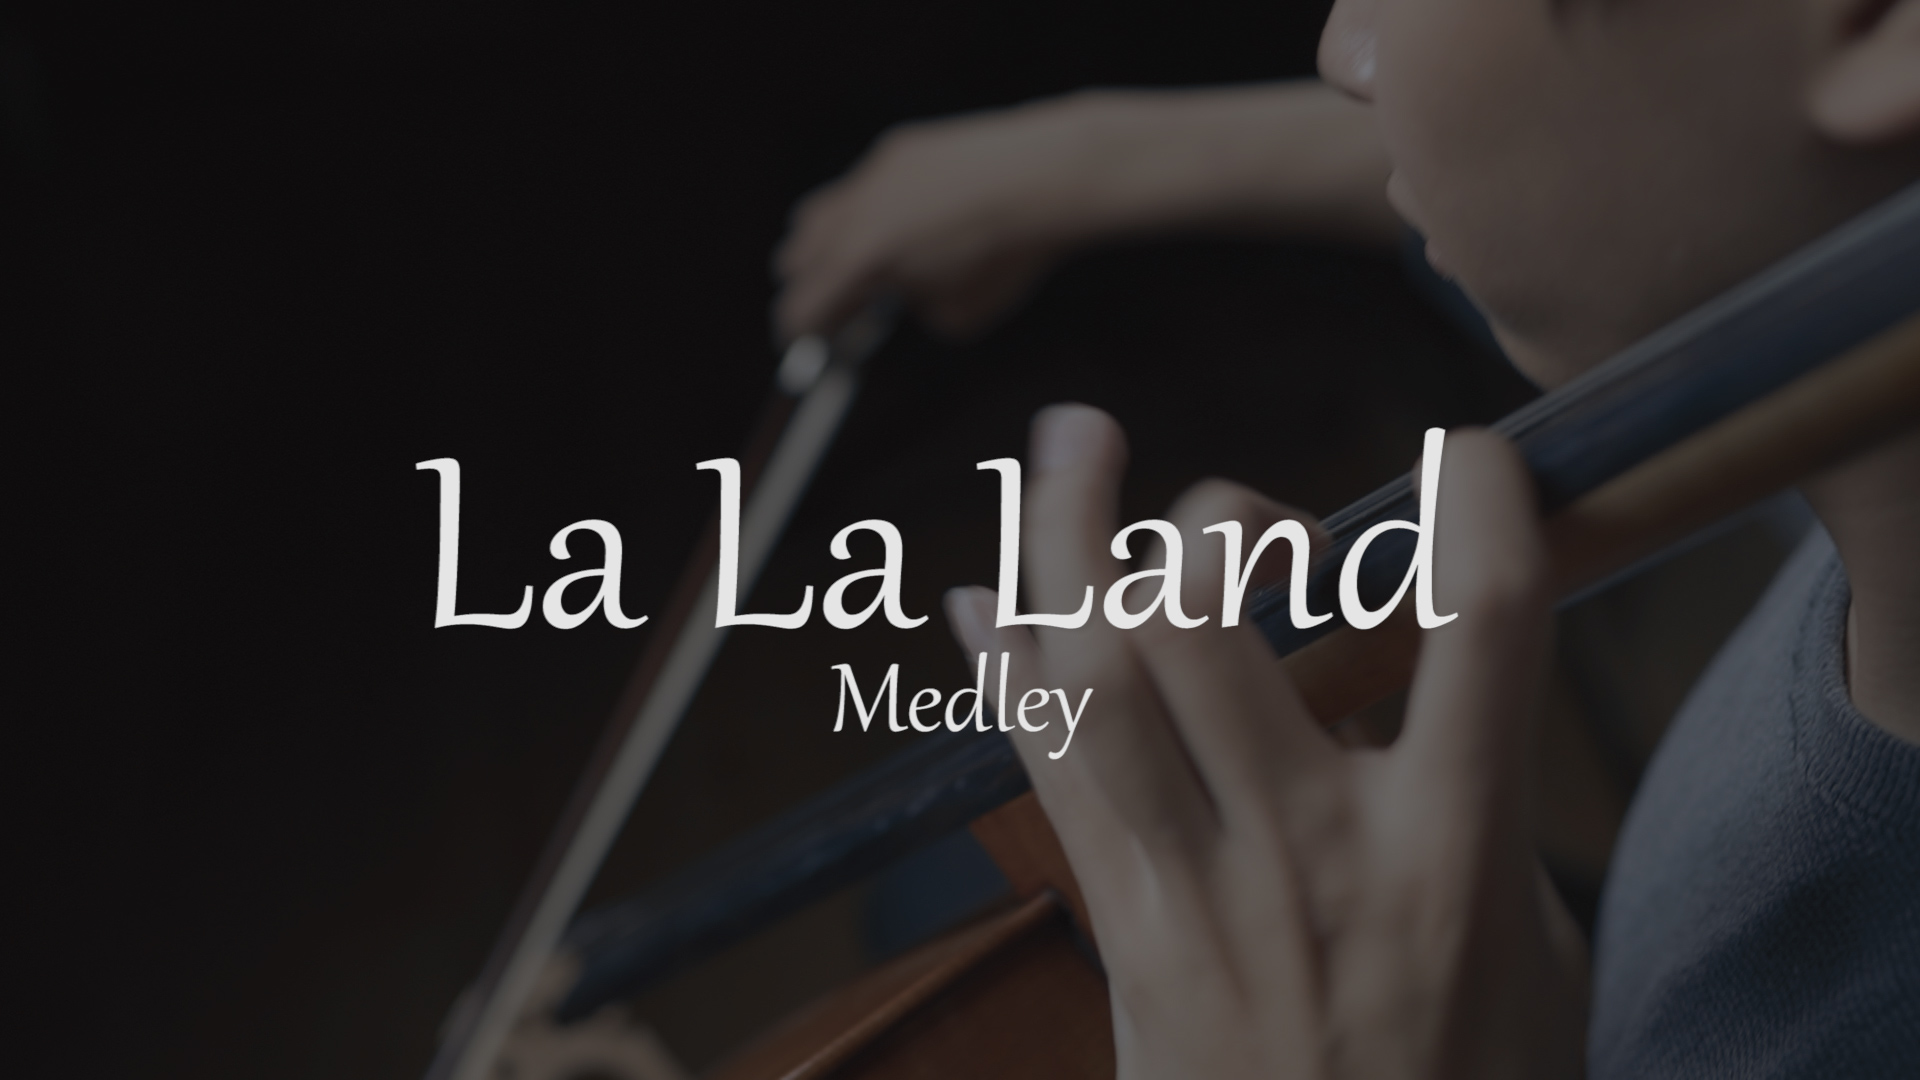 La La Land (樂來越愛你) 組曲Medley cello cover 大提琴版本 『cover by YoYo Cello』